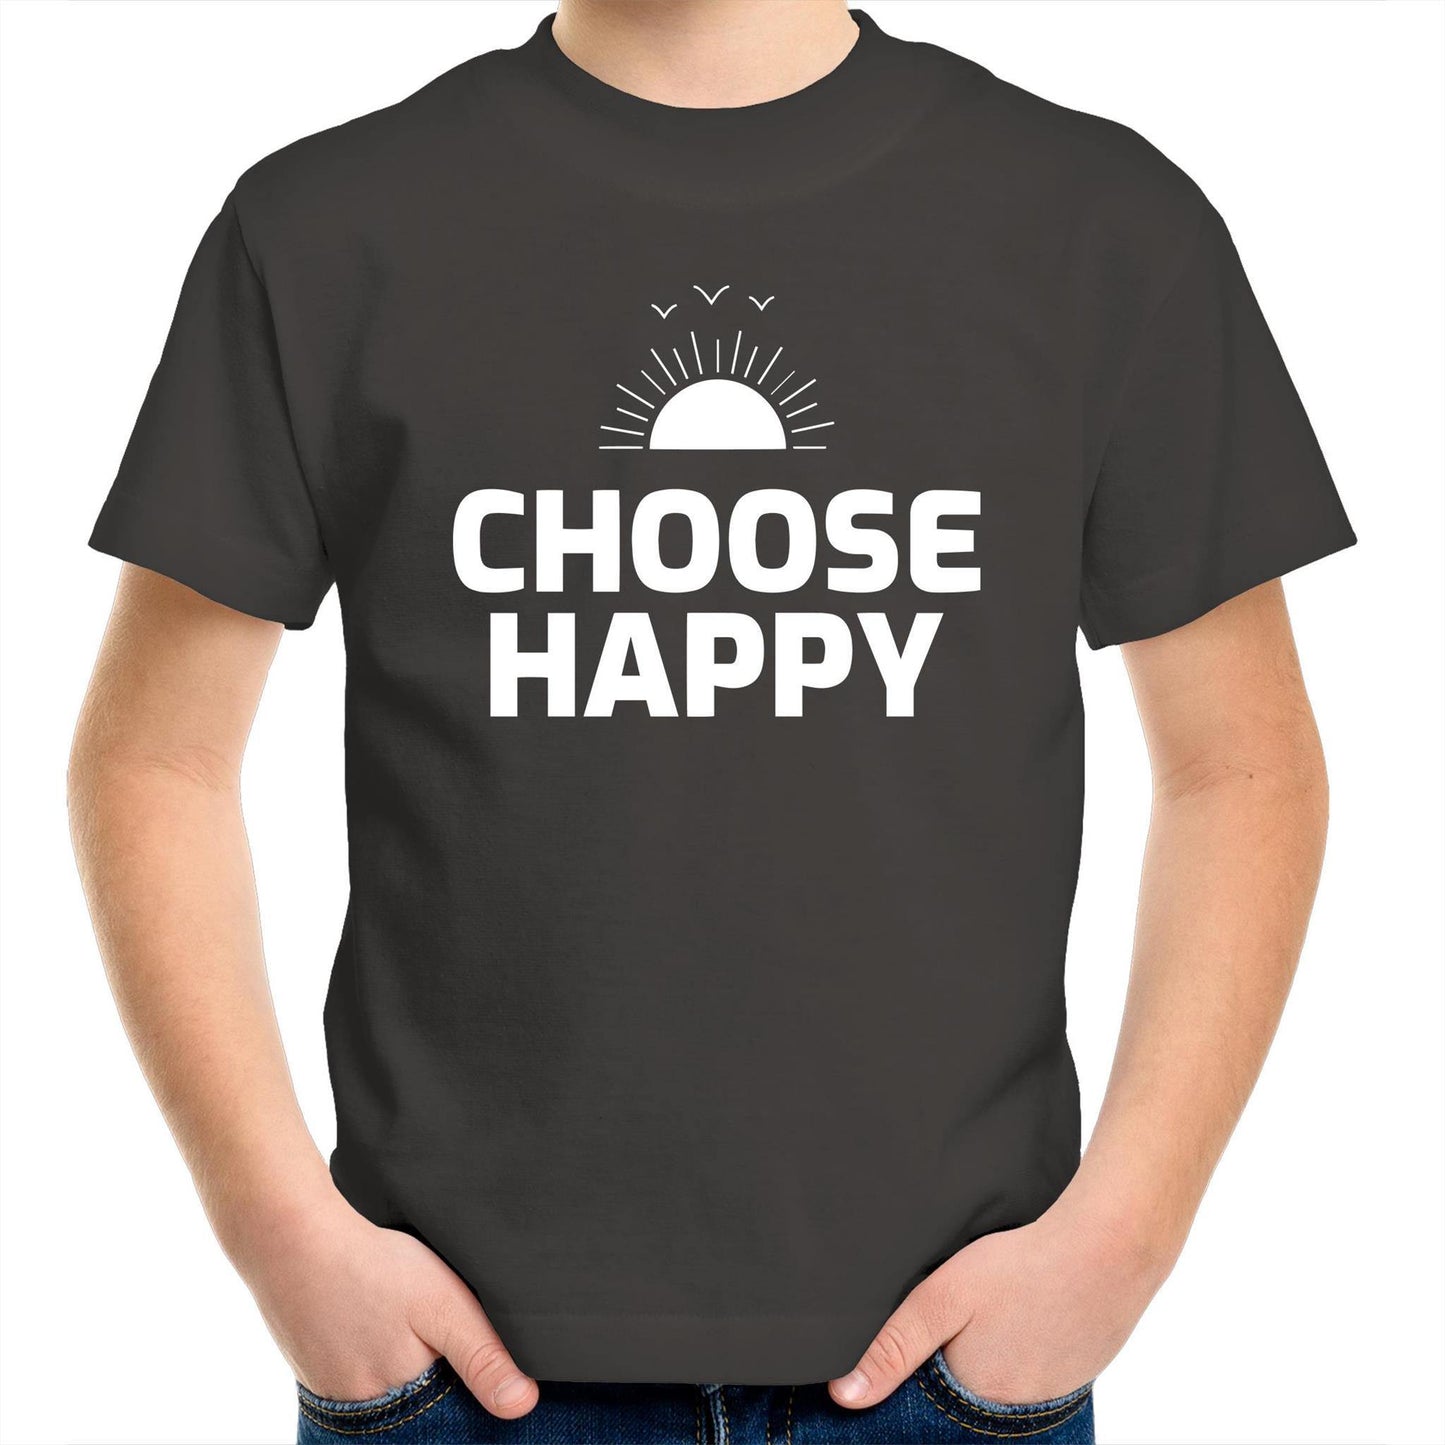 Choose Happy - Kids Youth Crew T-Shirt Charcoal Kids Youth T-shirt